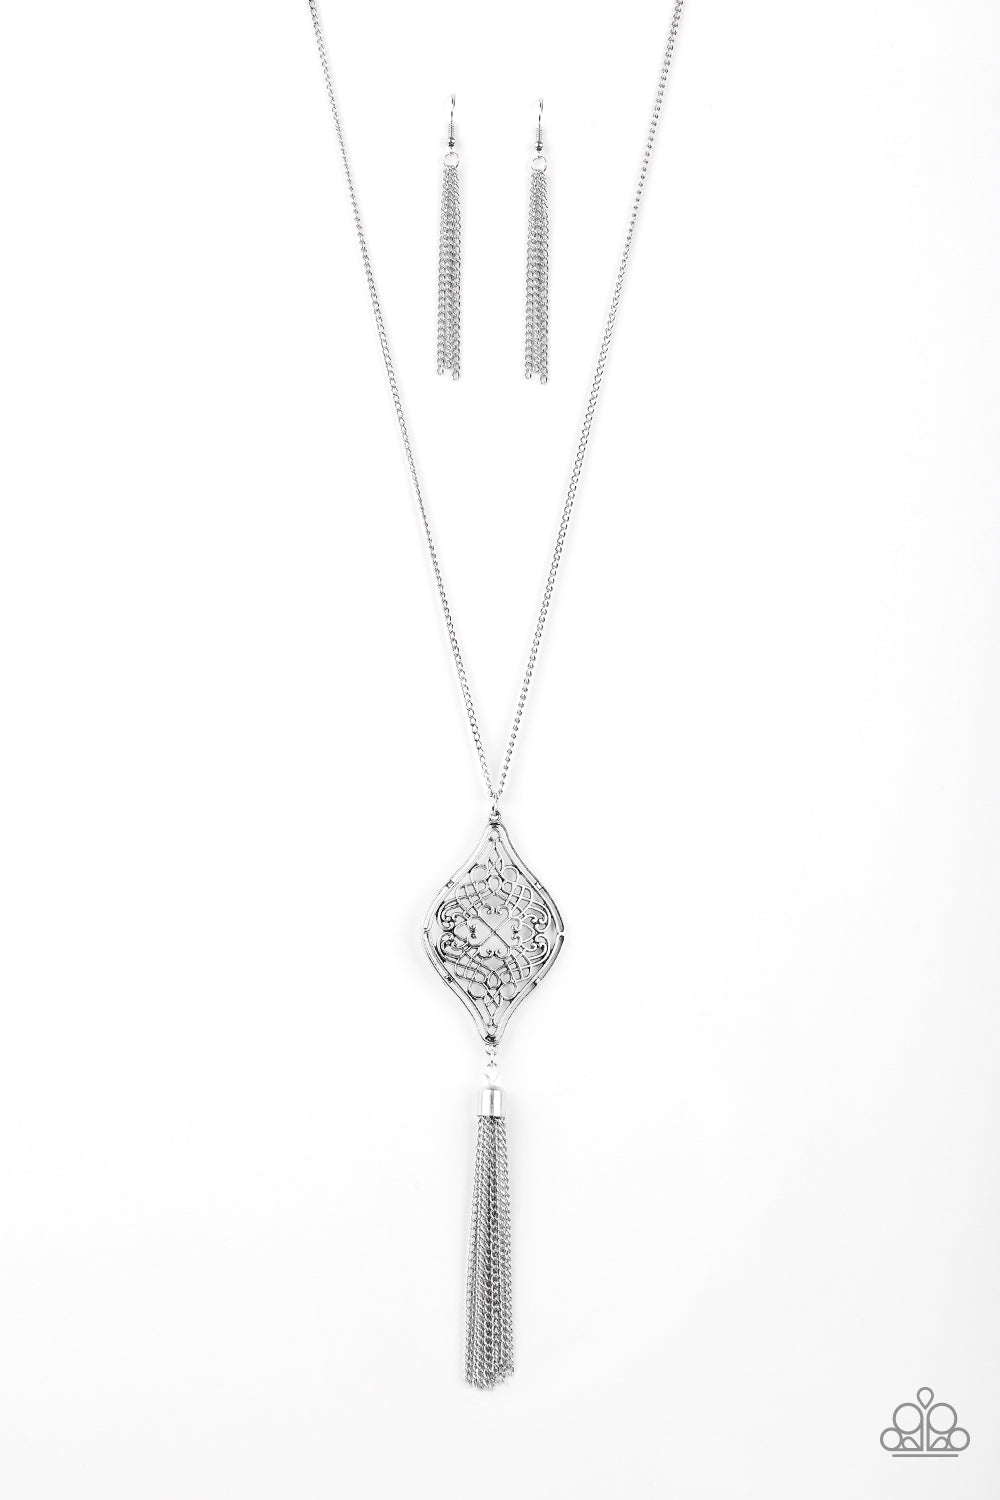 Totally Worth The TASSEL - Silver Necklace freeshipping - JewLz4u Gemstone Gallery